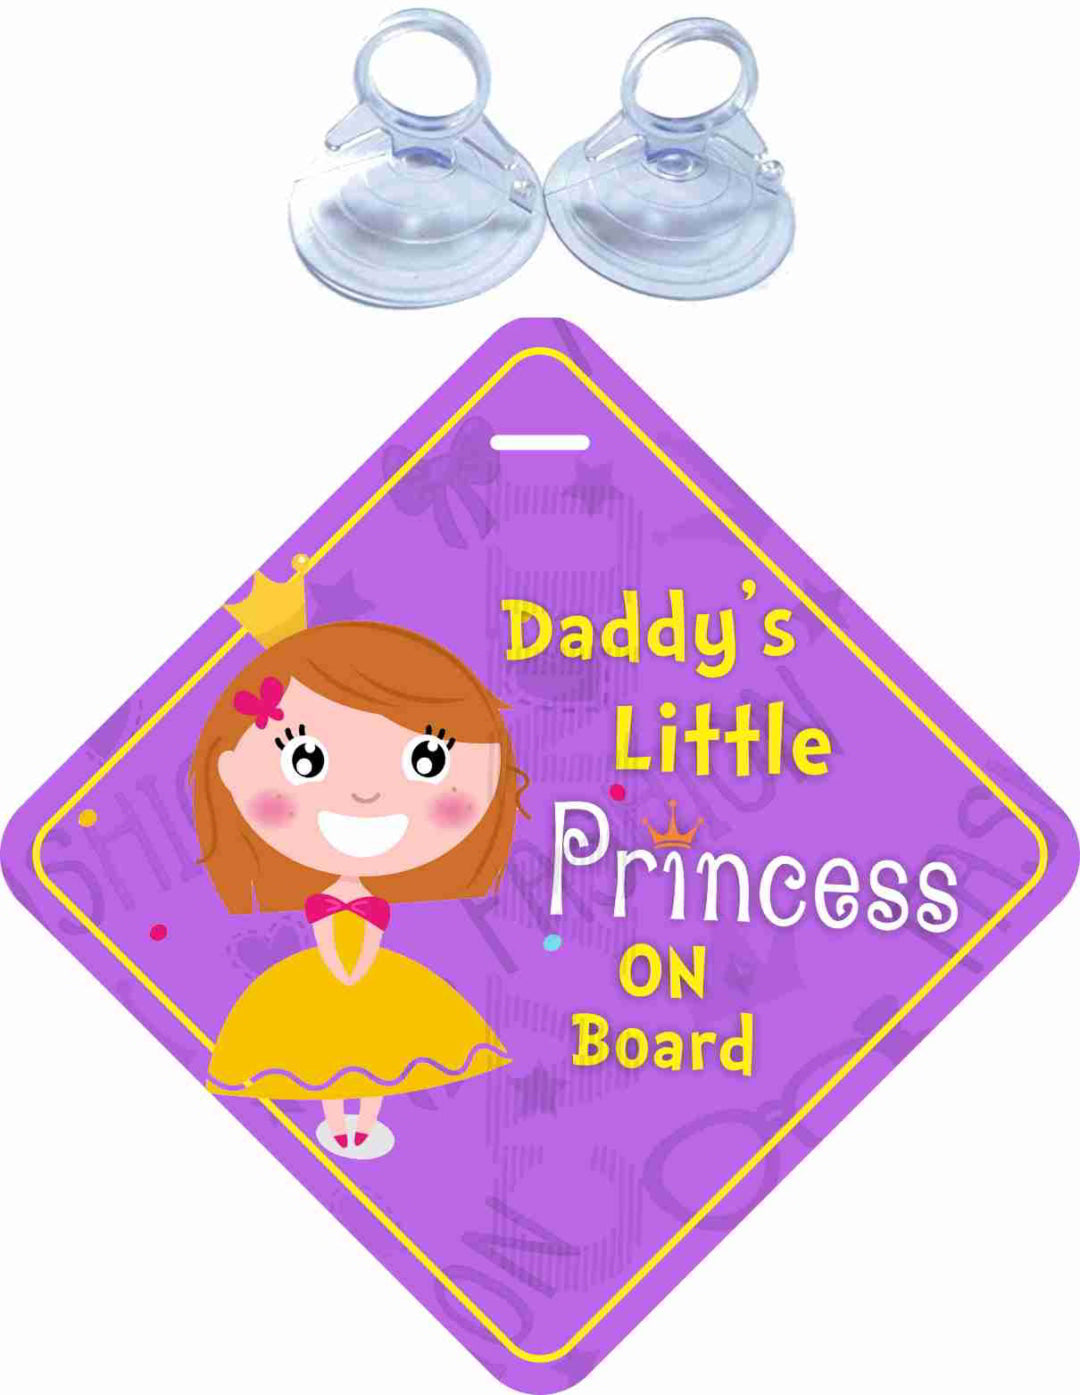 Daddy's Little Princess on Board Car Sticker